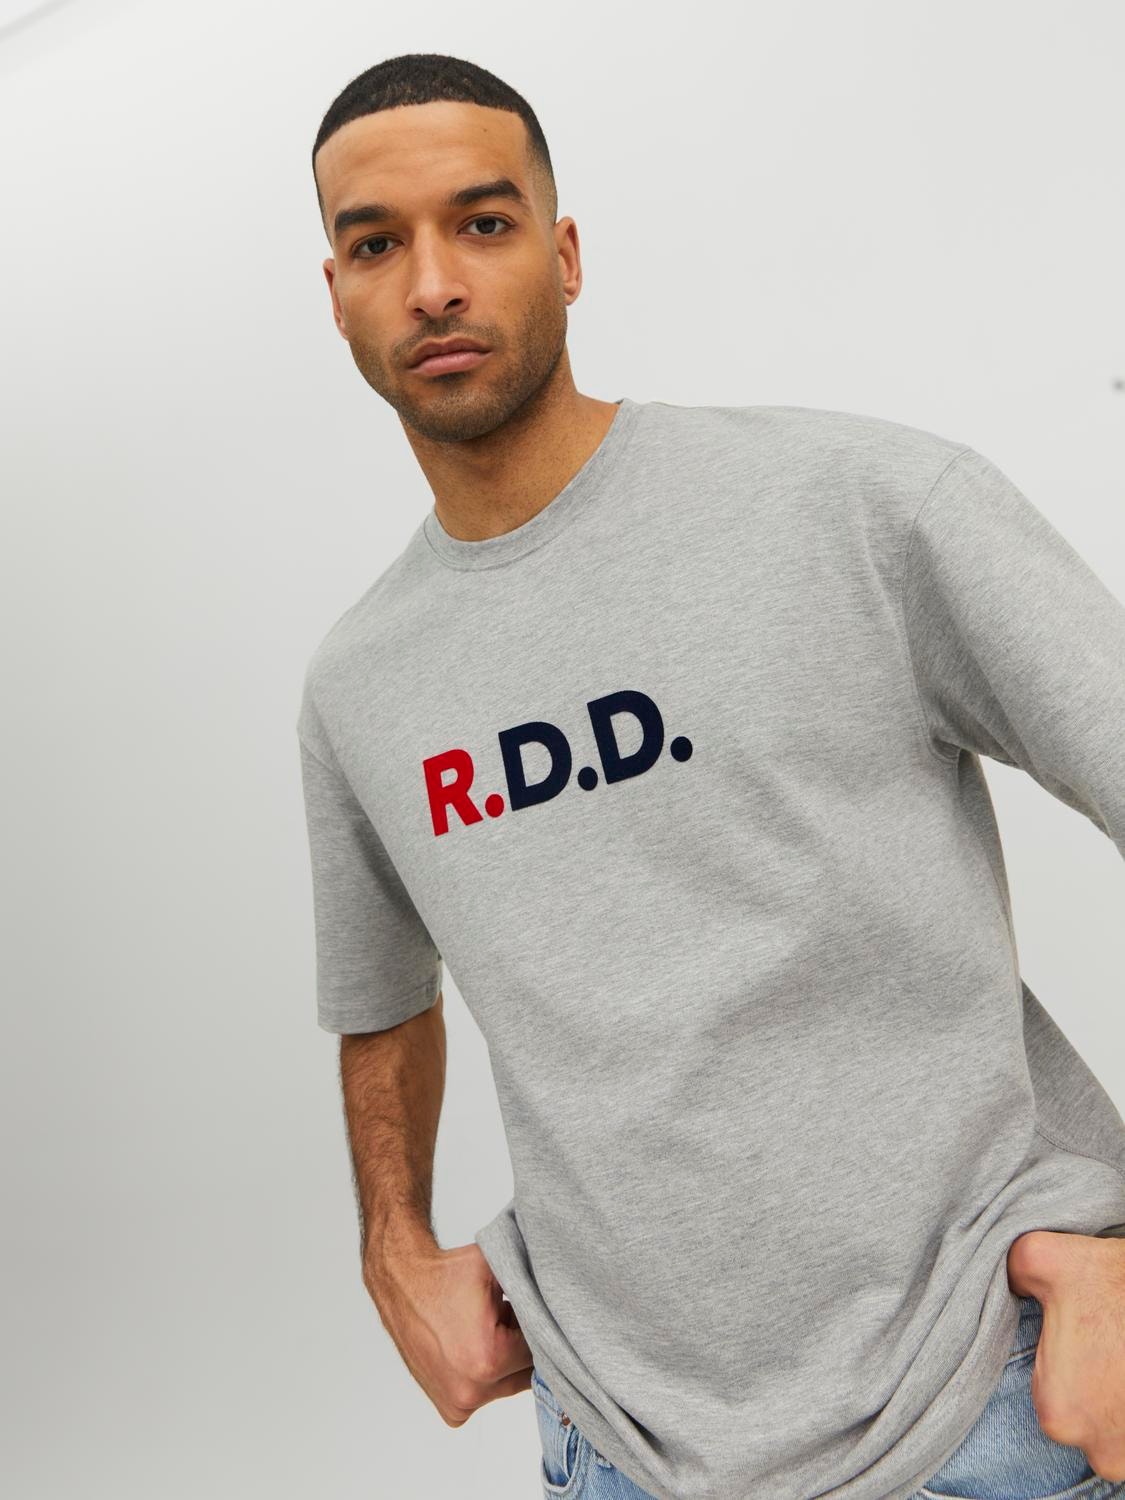 Jack & Jones RDD T-shirt Logo Decote Redondo -Light Grey Melange - 12218239